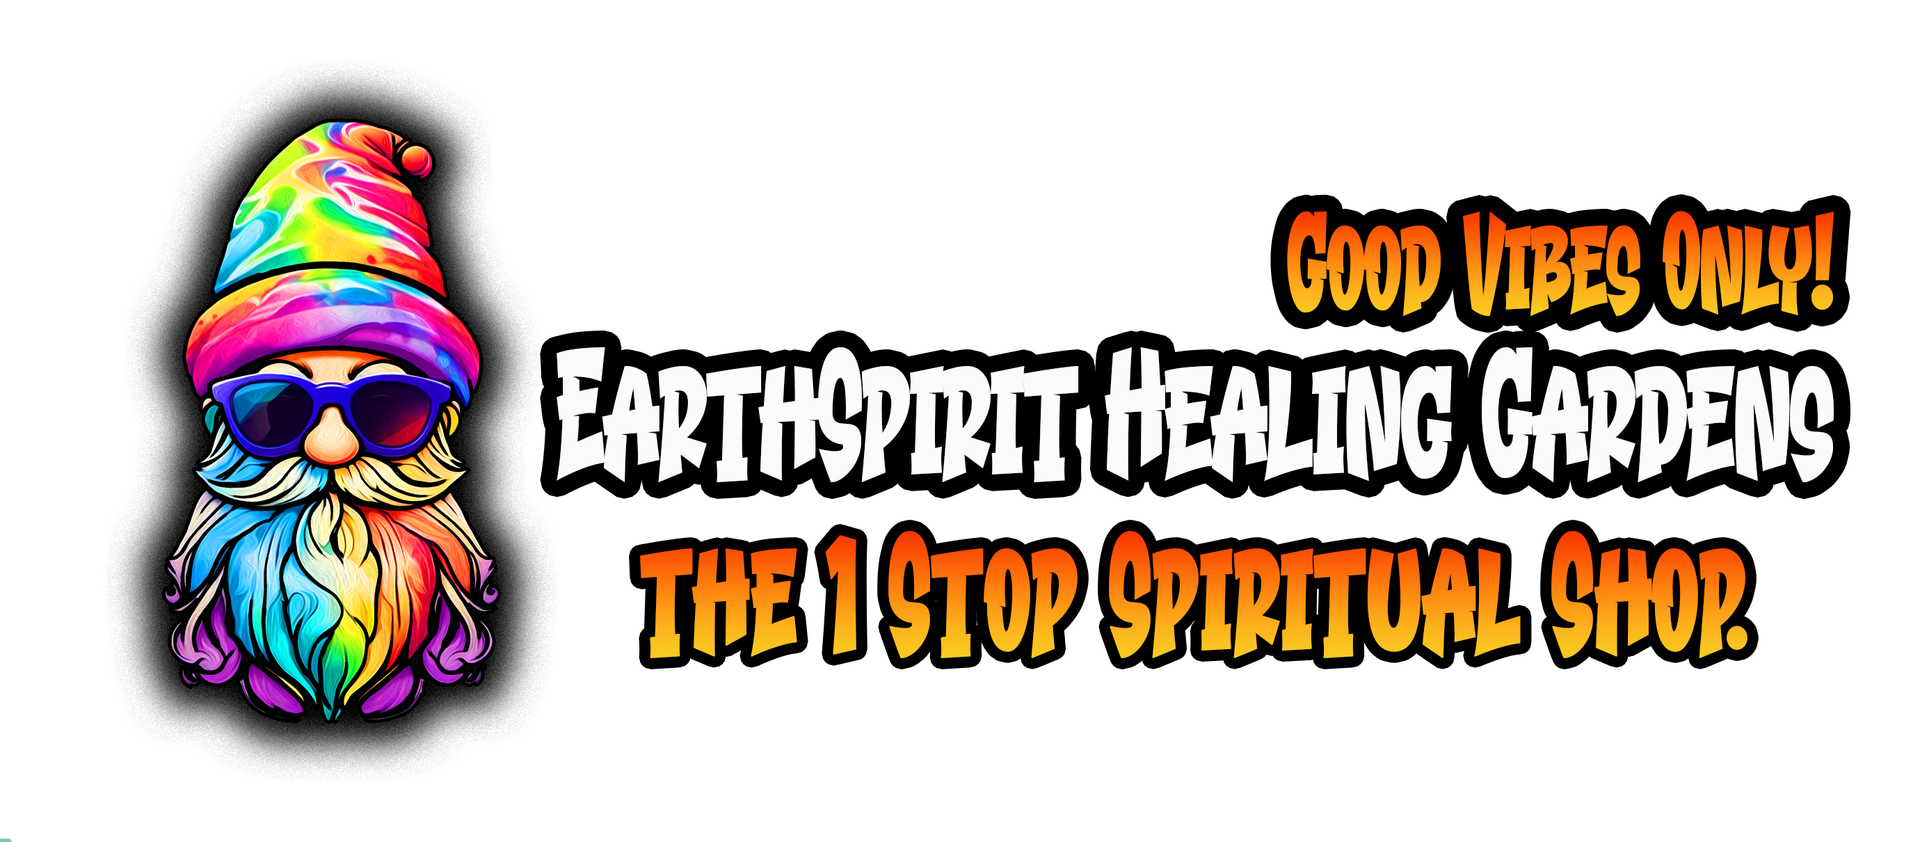 EarthSpirit Healing Gardens